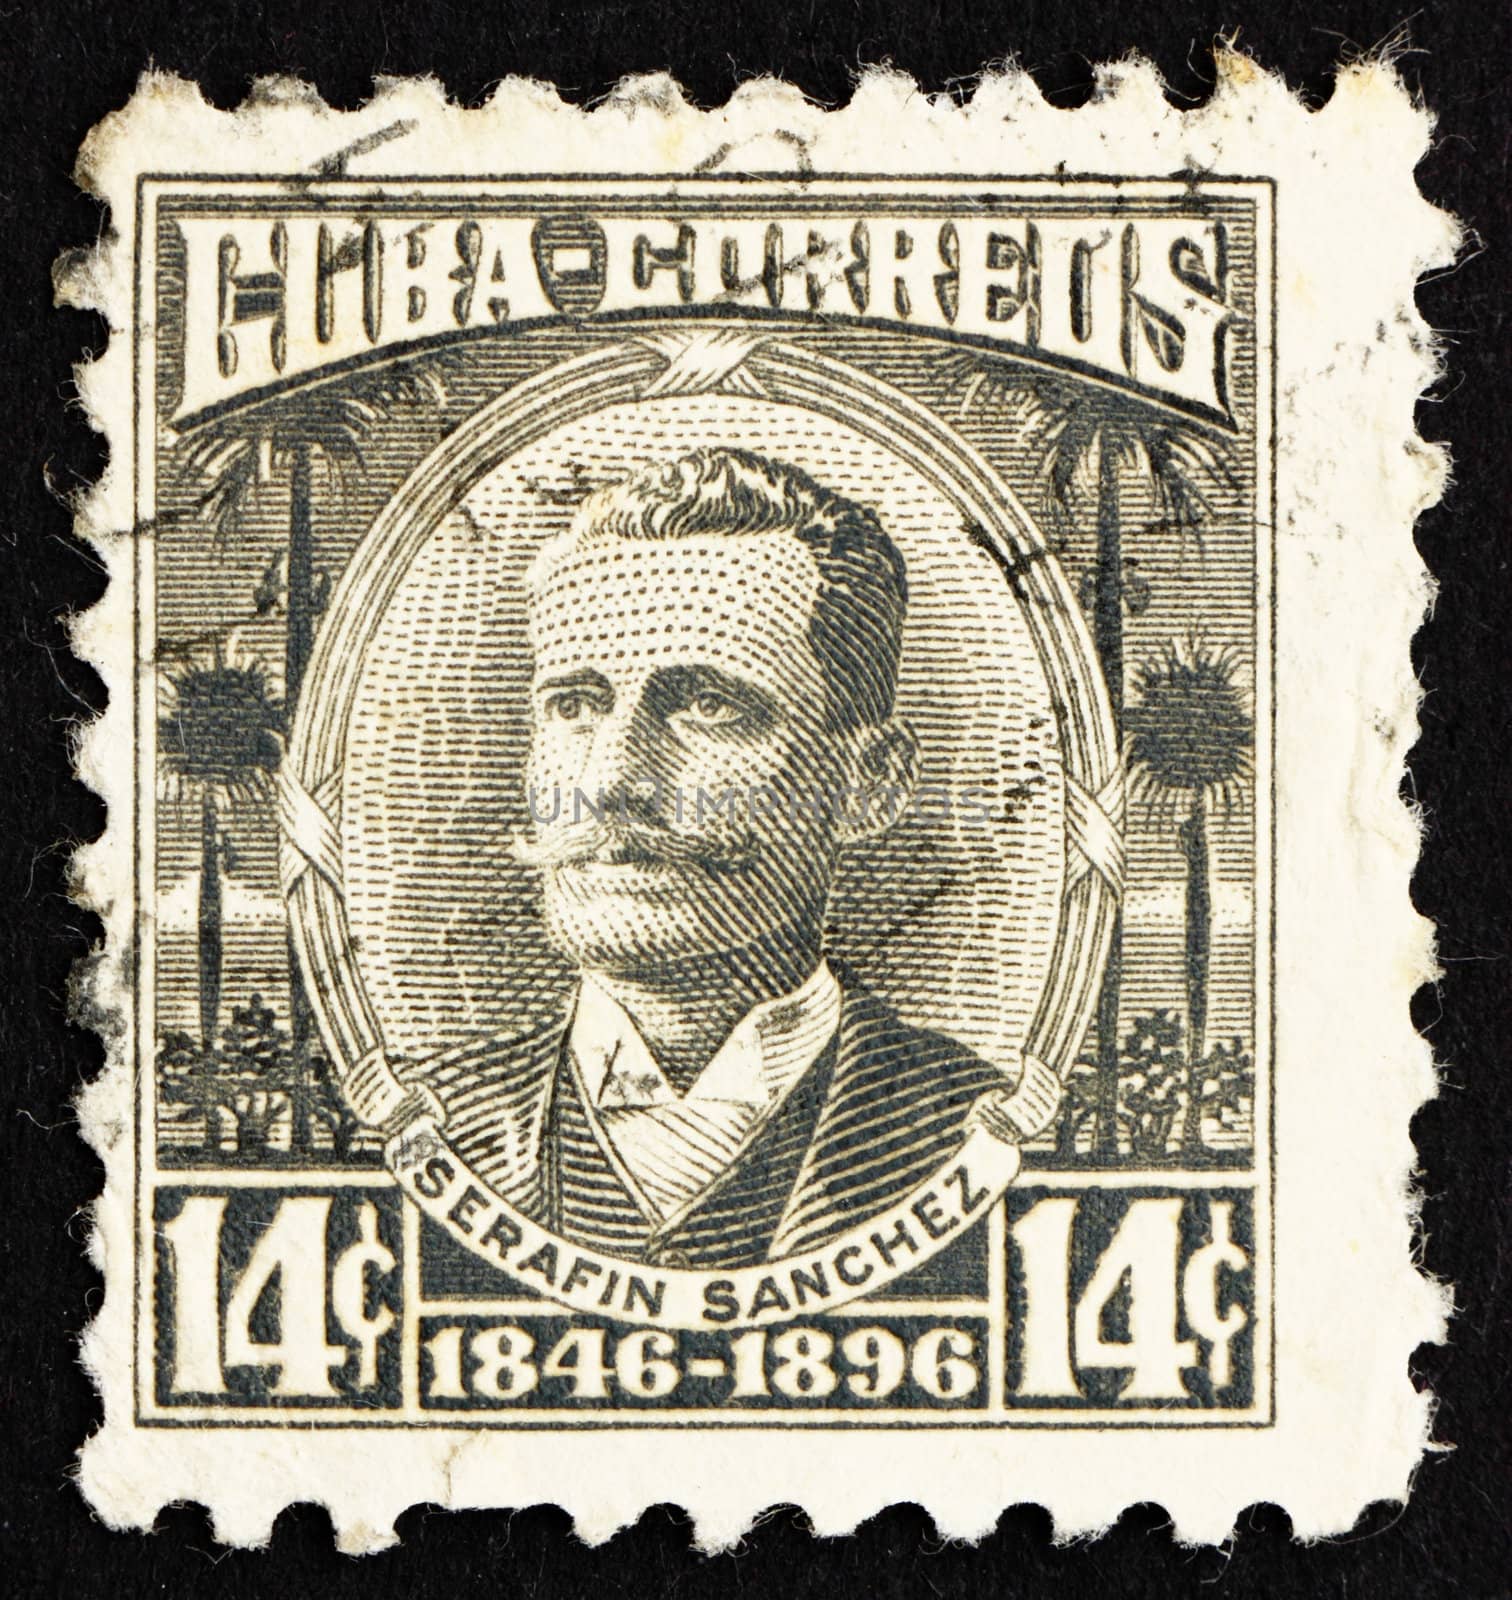 CUBA - CIRCA 1956: a stamp printed in the Cuba shows Serafin Sanchez Valdivia, General, circa 1956